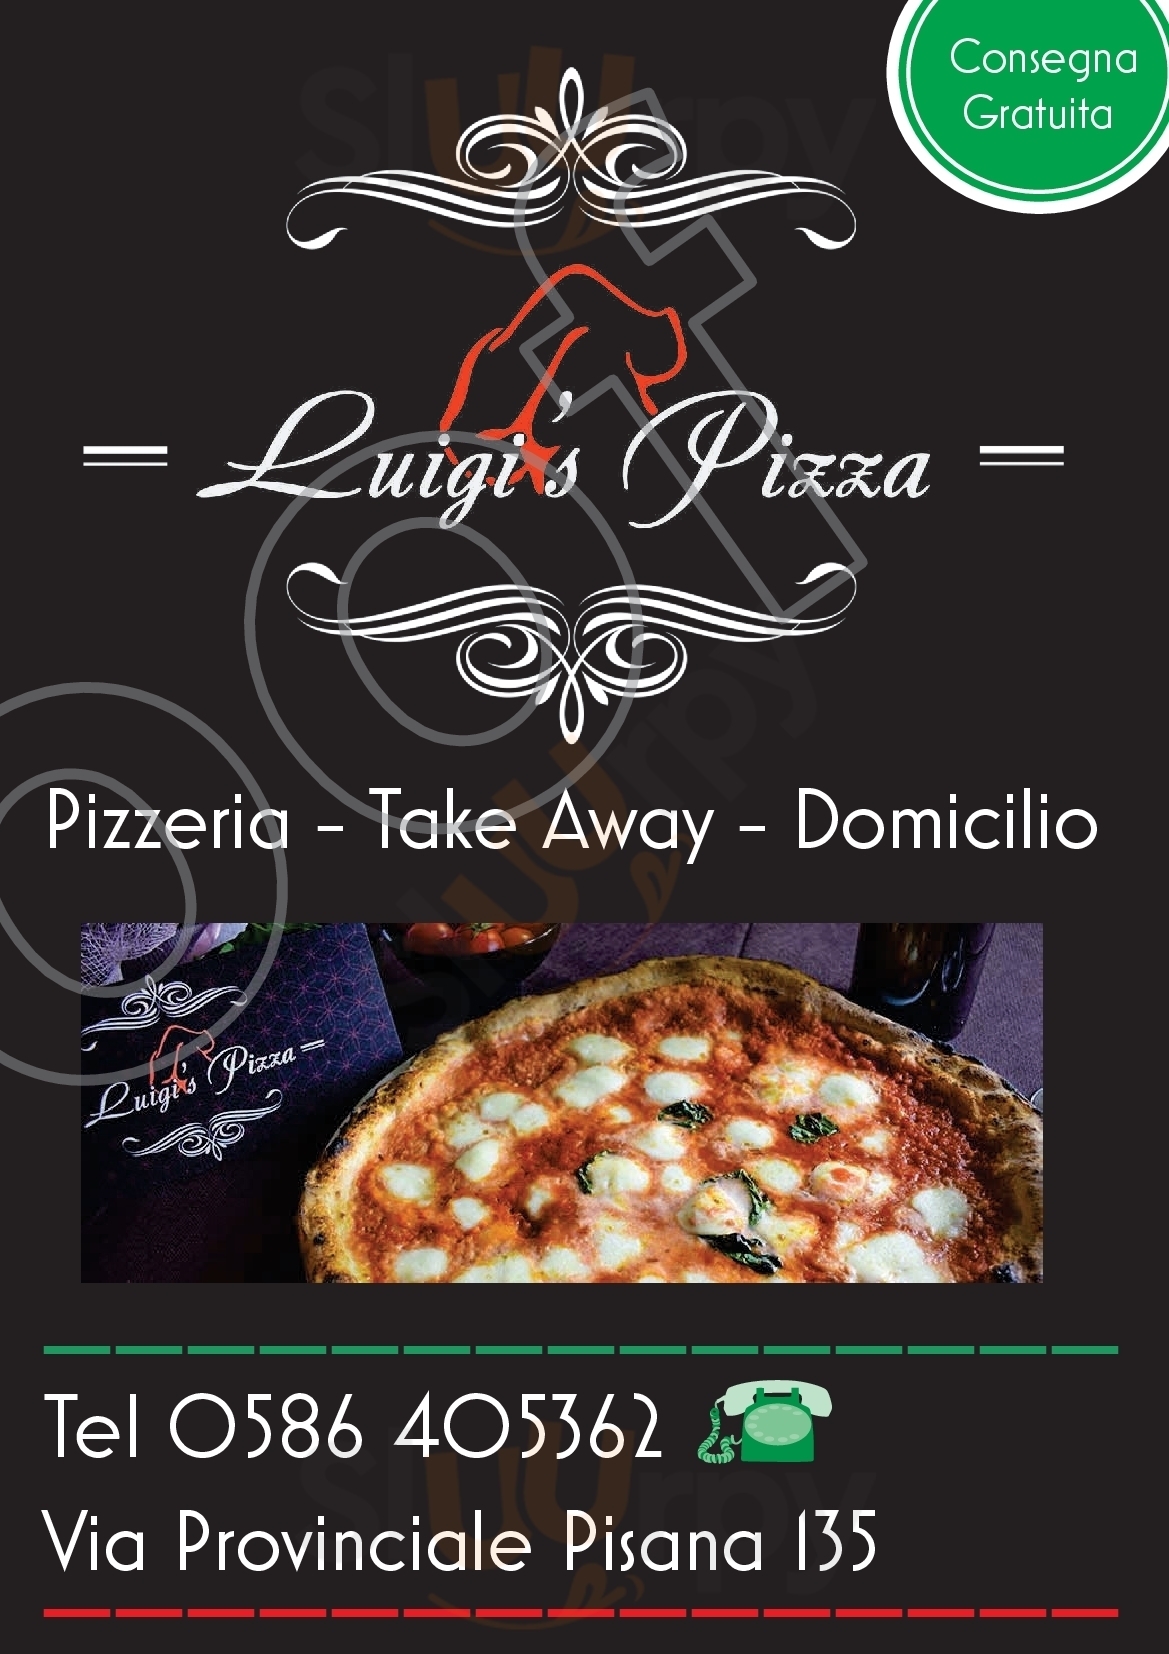 Luigi's Pizza Livorno menù 1 pagina